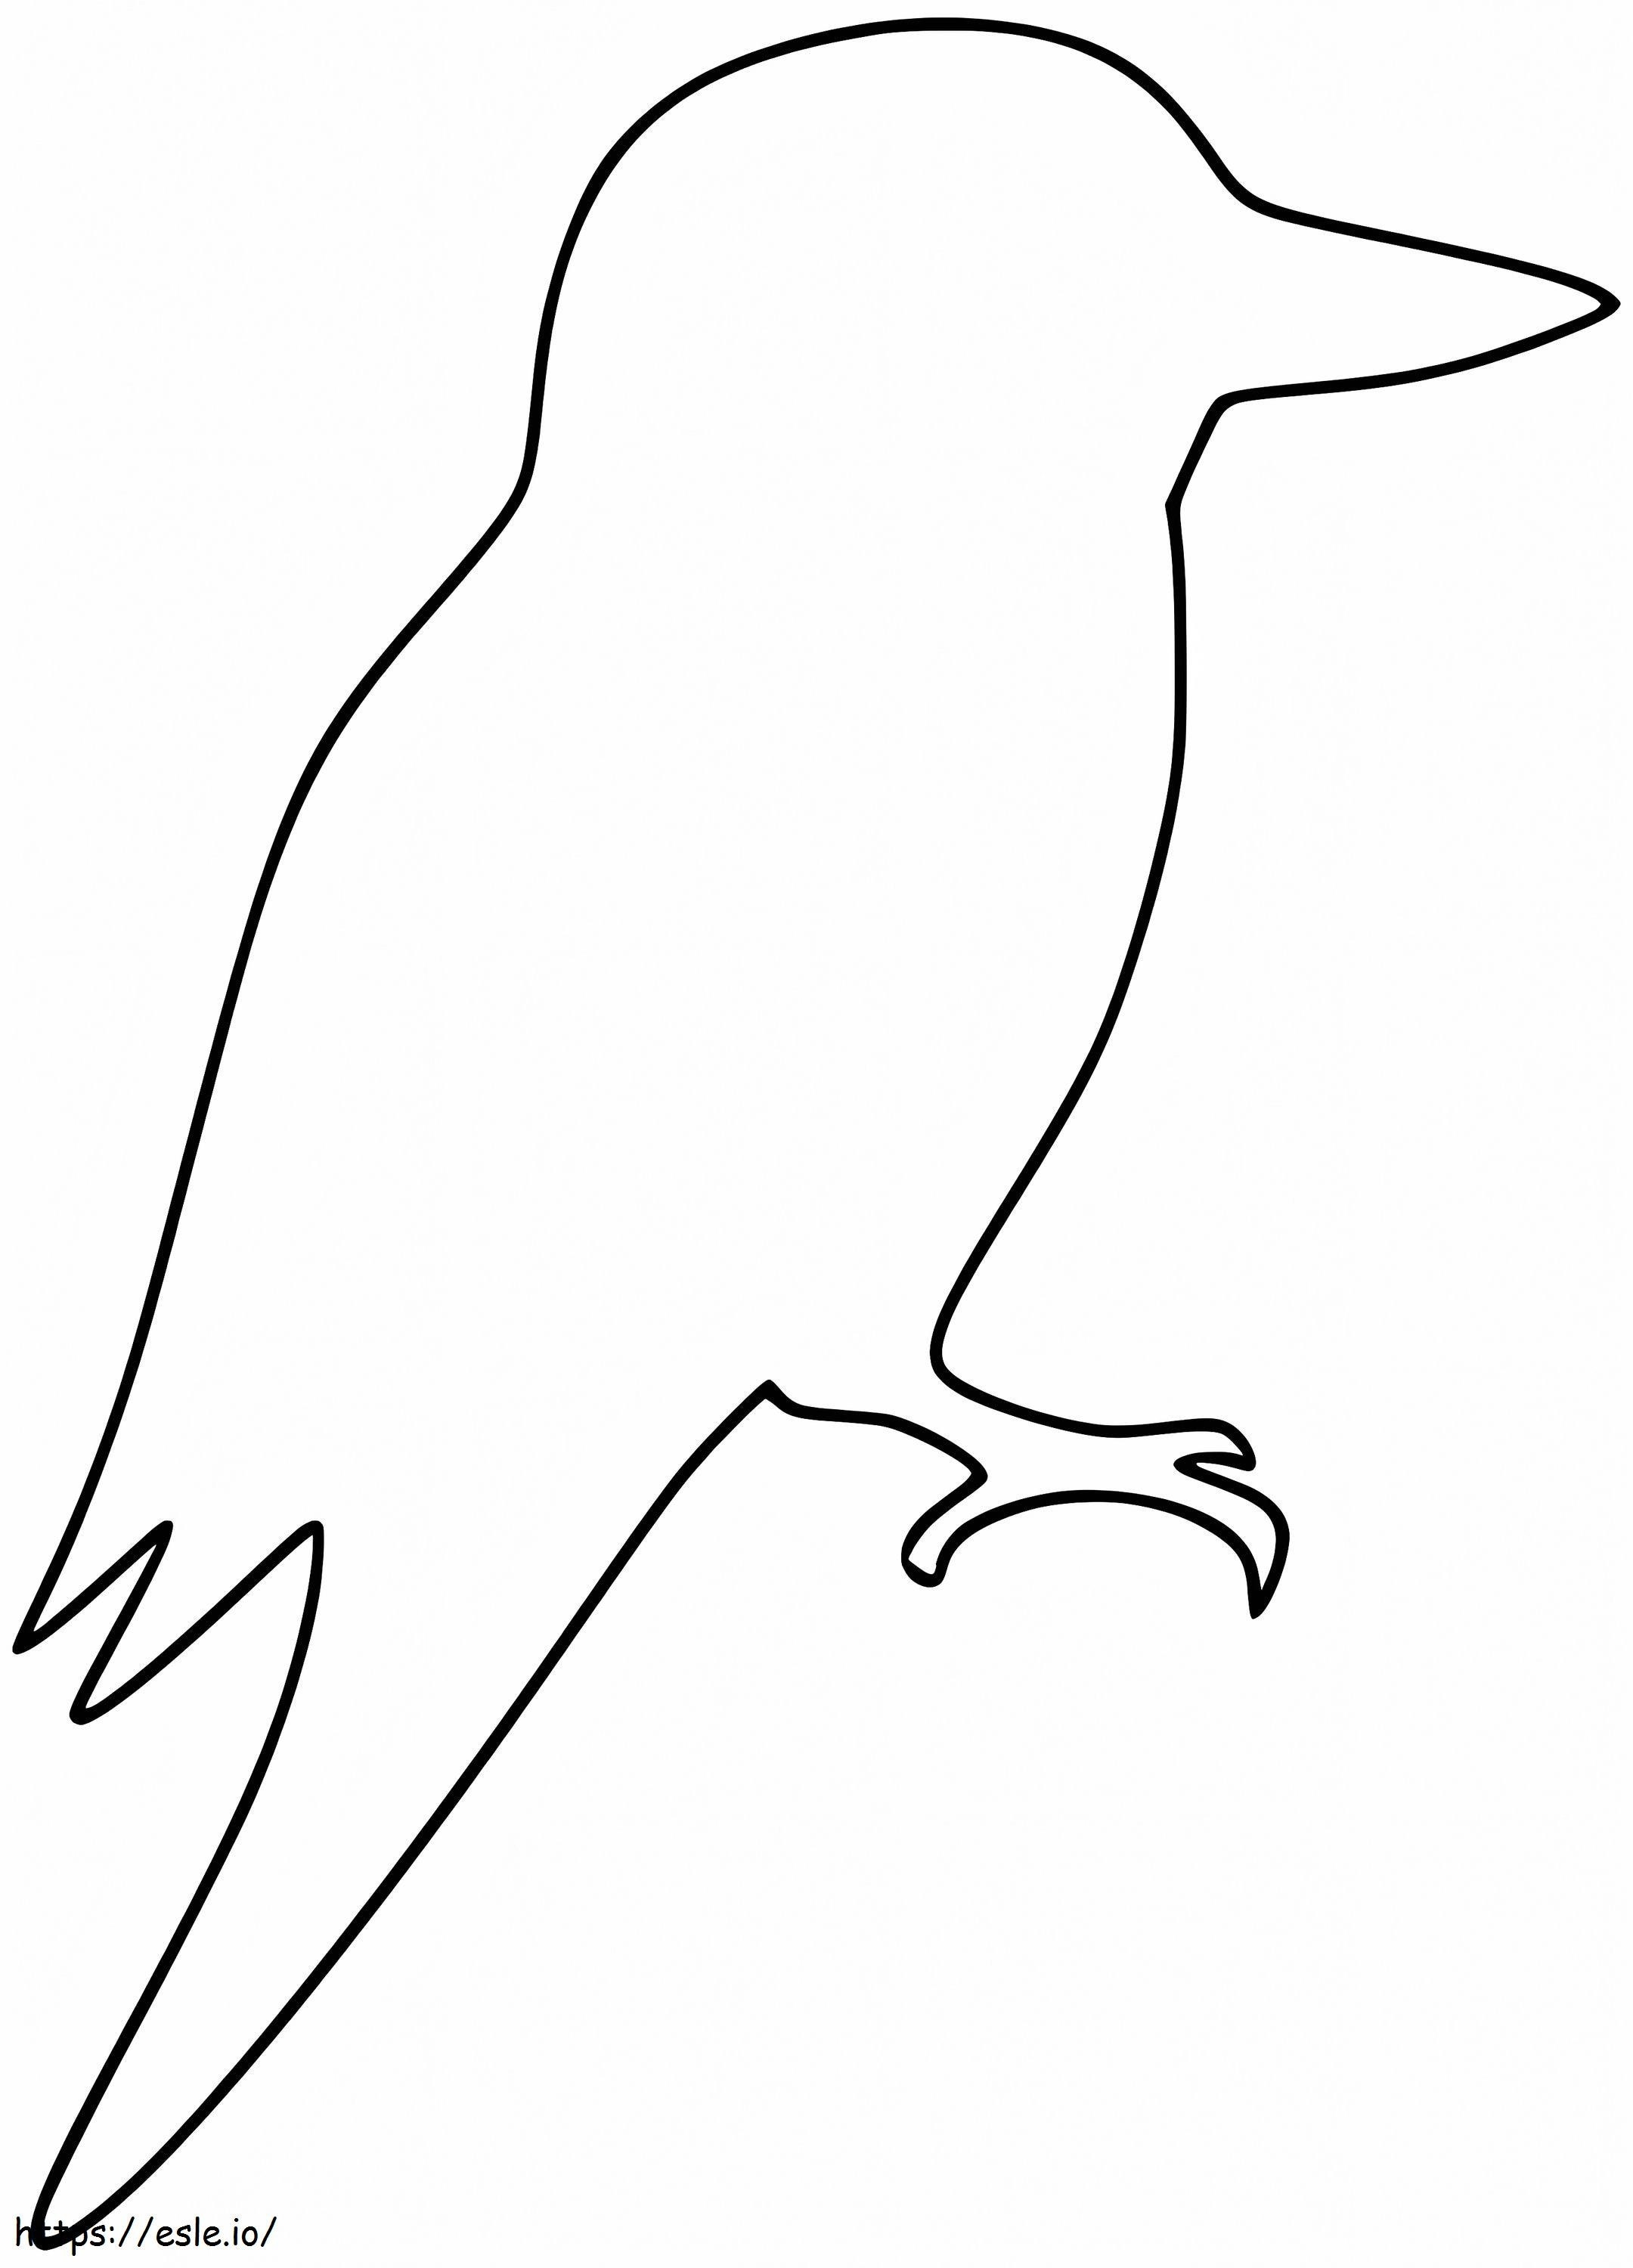 Coloriage Contour du Kookaburra à imprimer dessin